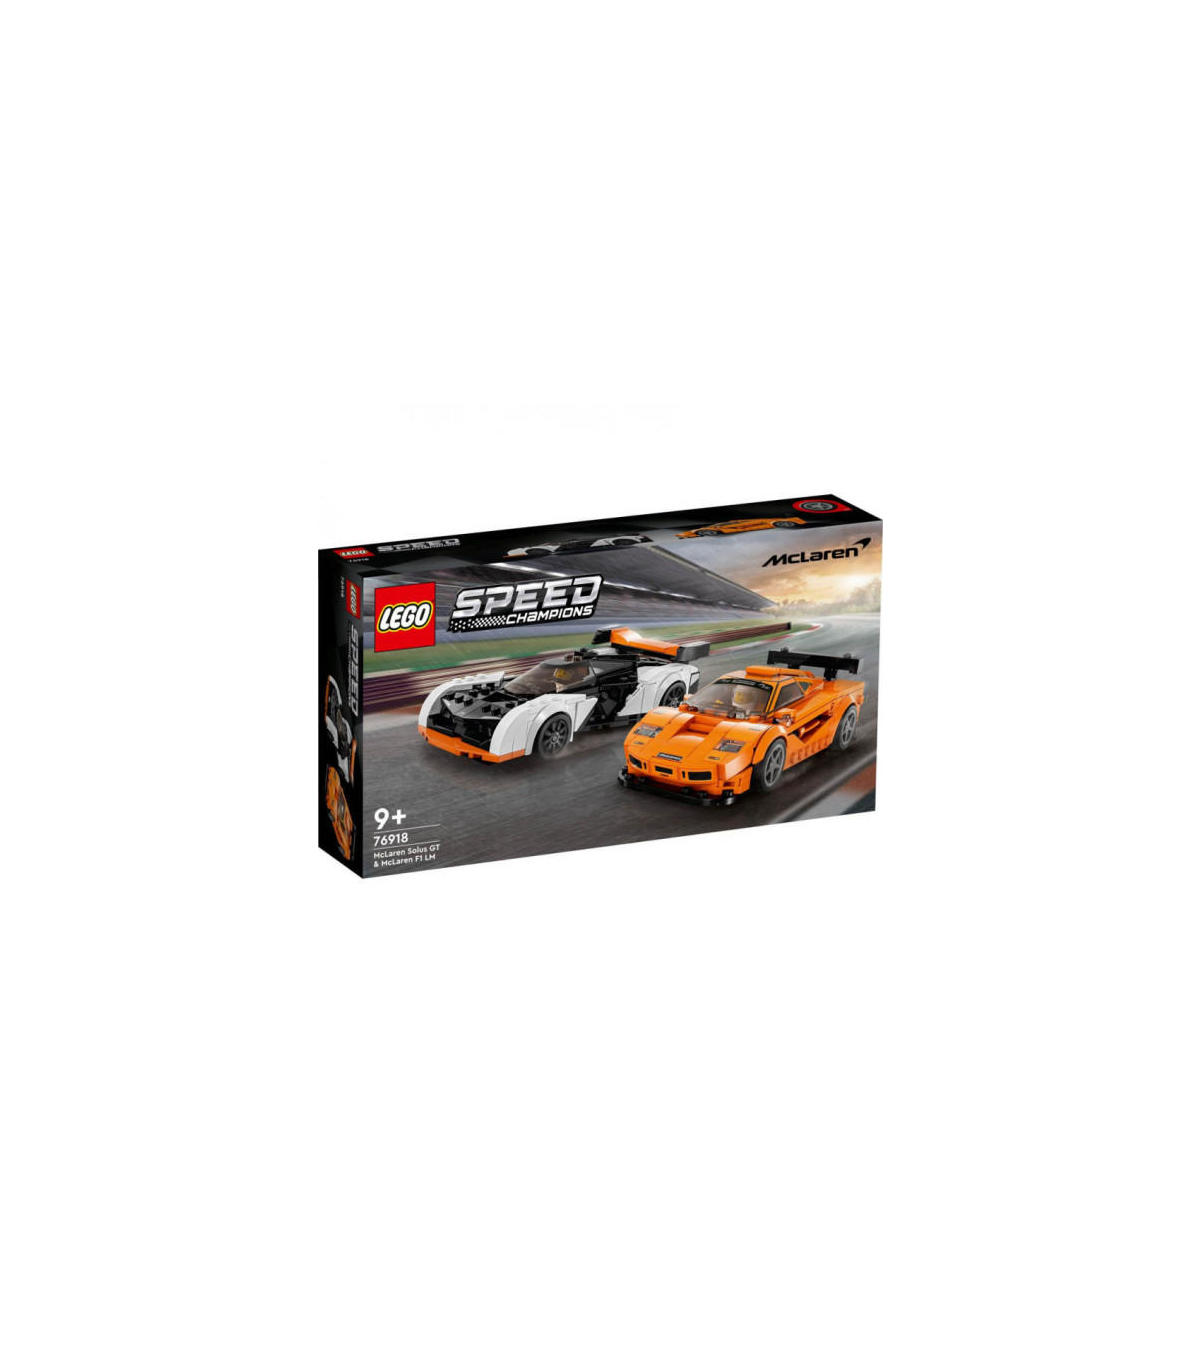  LEGO Speed Champions McLaren Solus GT y McLaren F1 LM